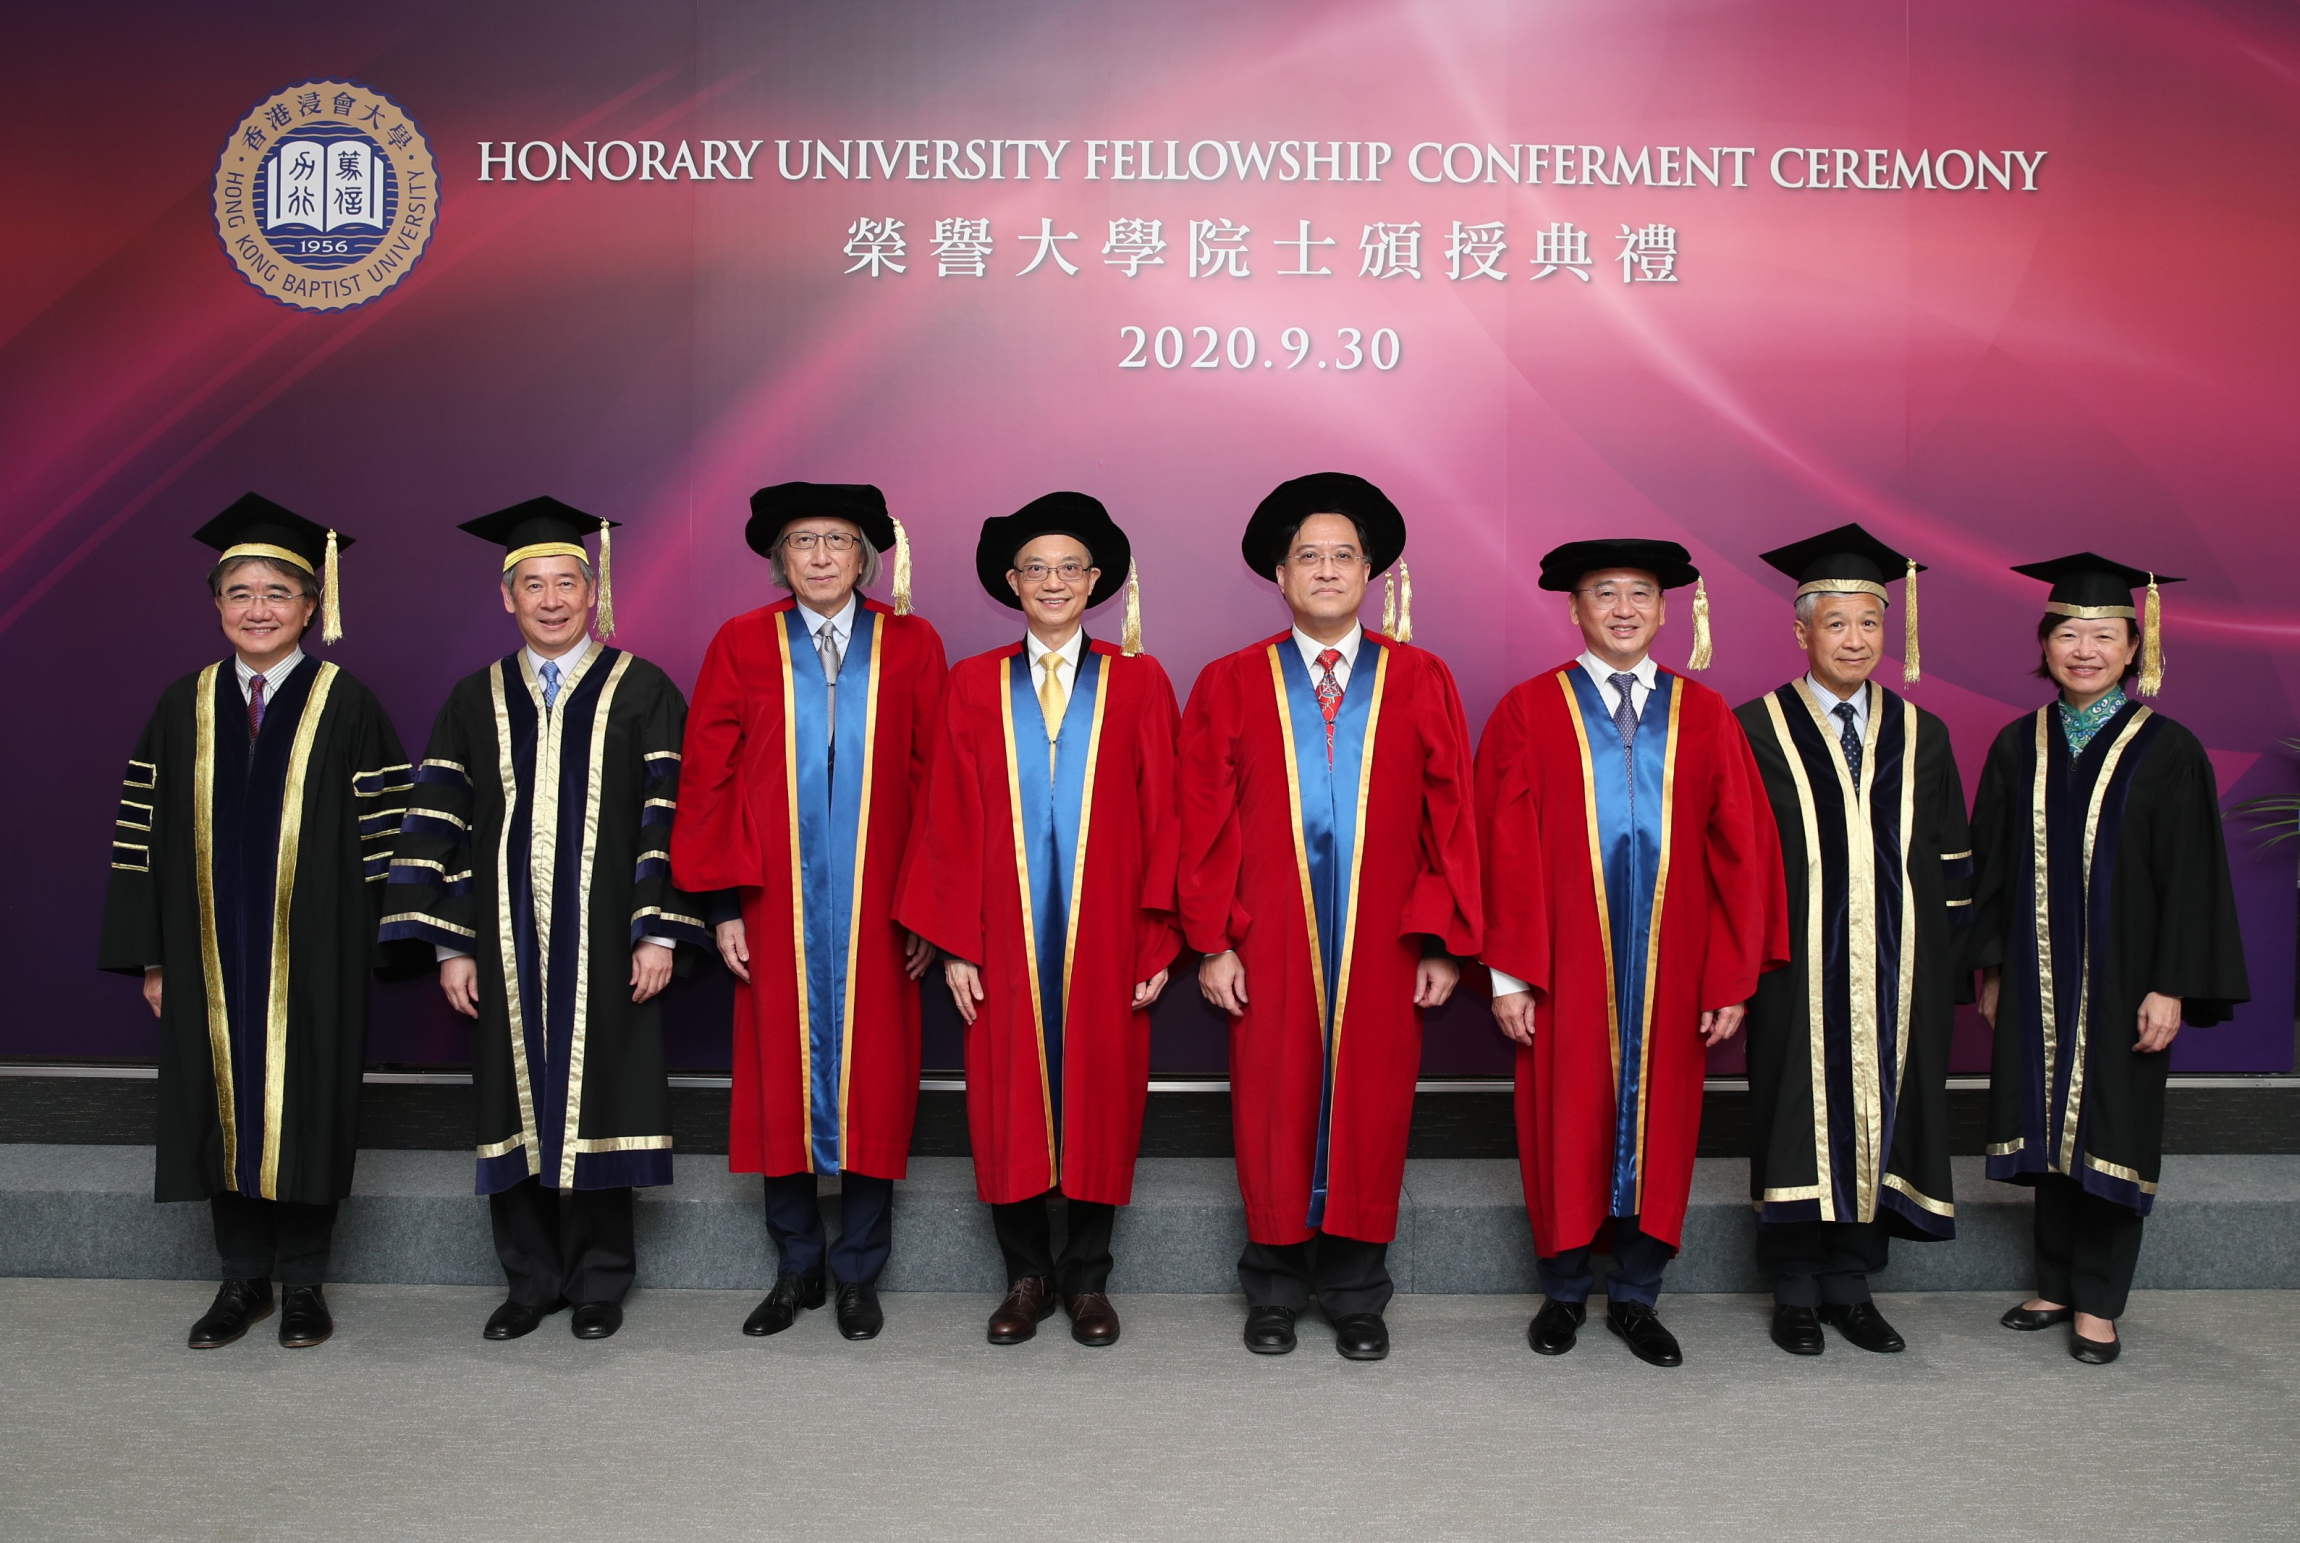 Honorary University Fellowship Conferment Ceremony